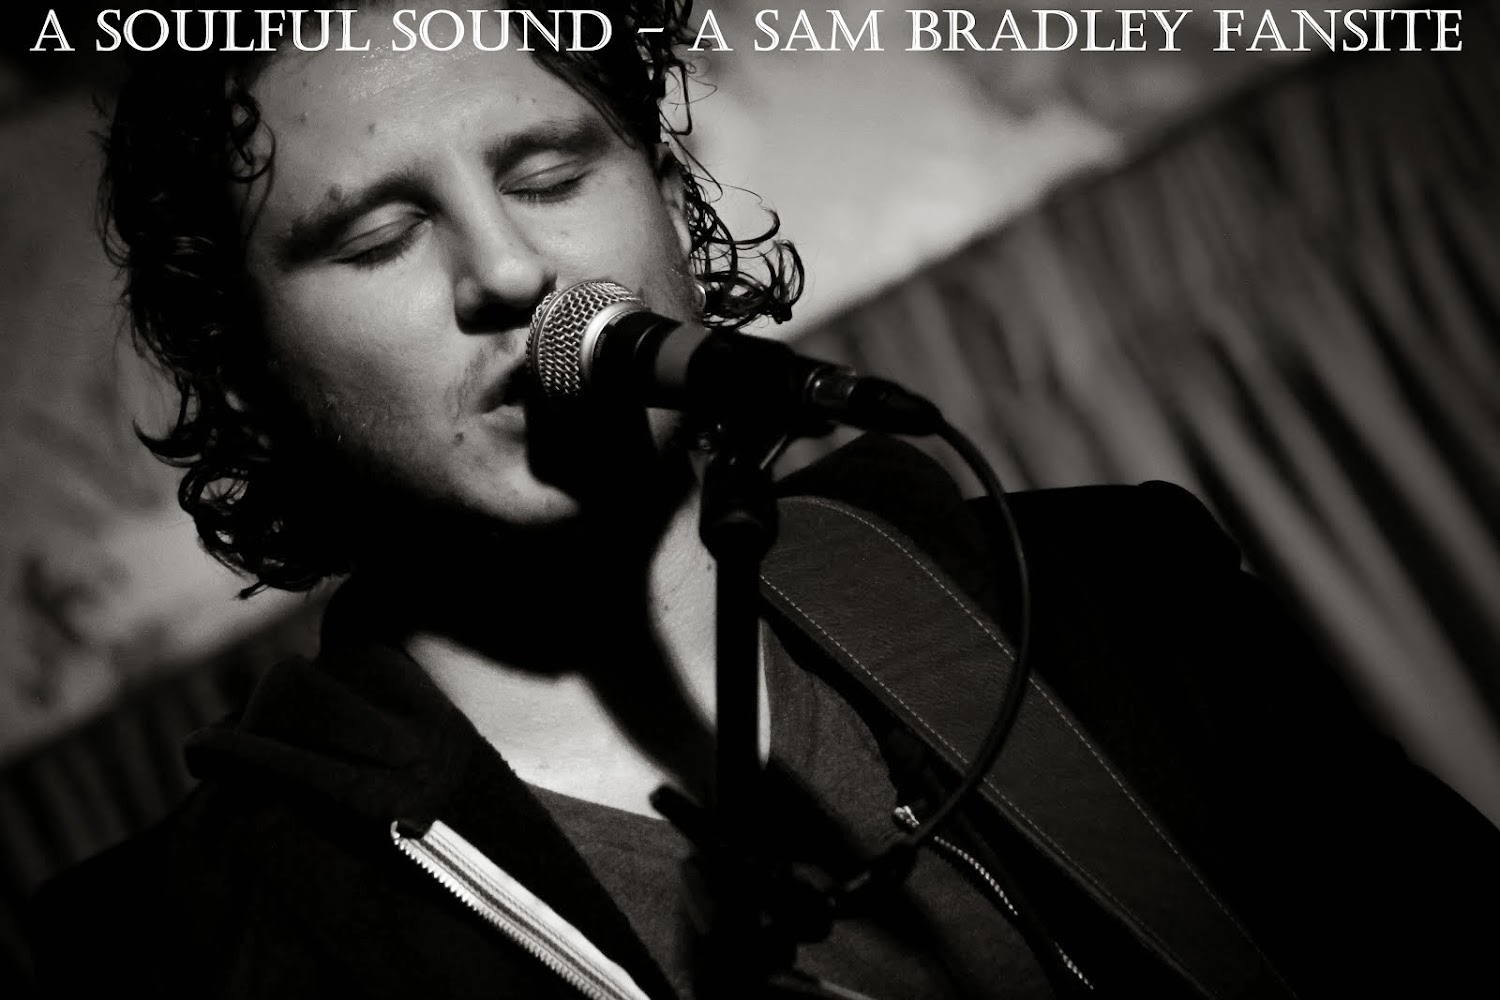 Sam Bradley Music - A Soulful Sound